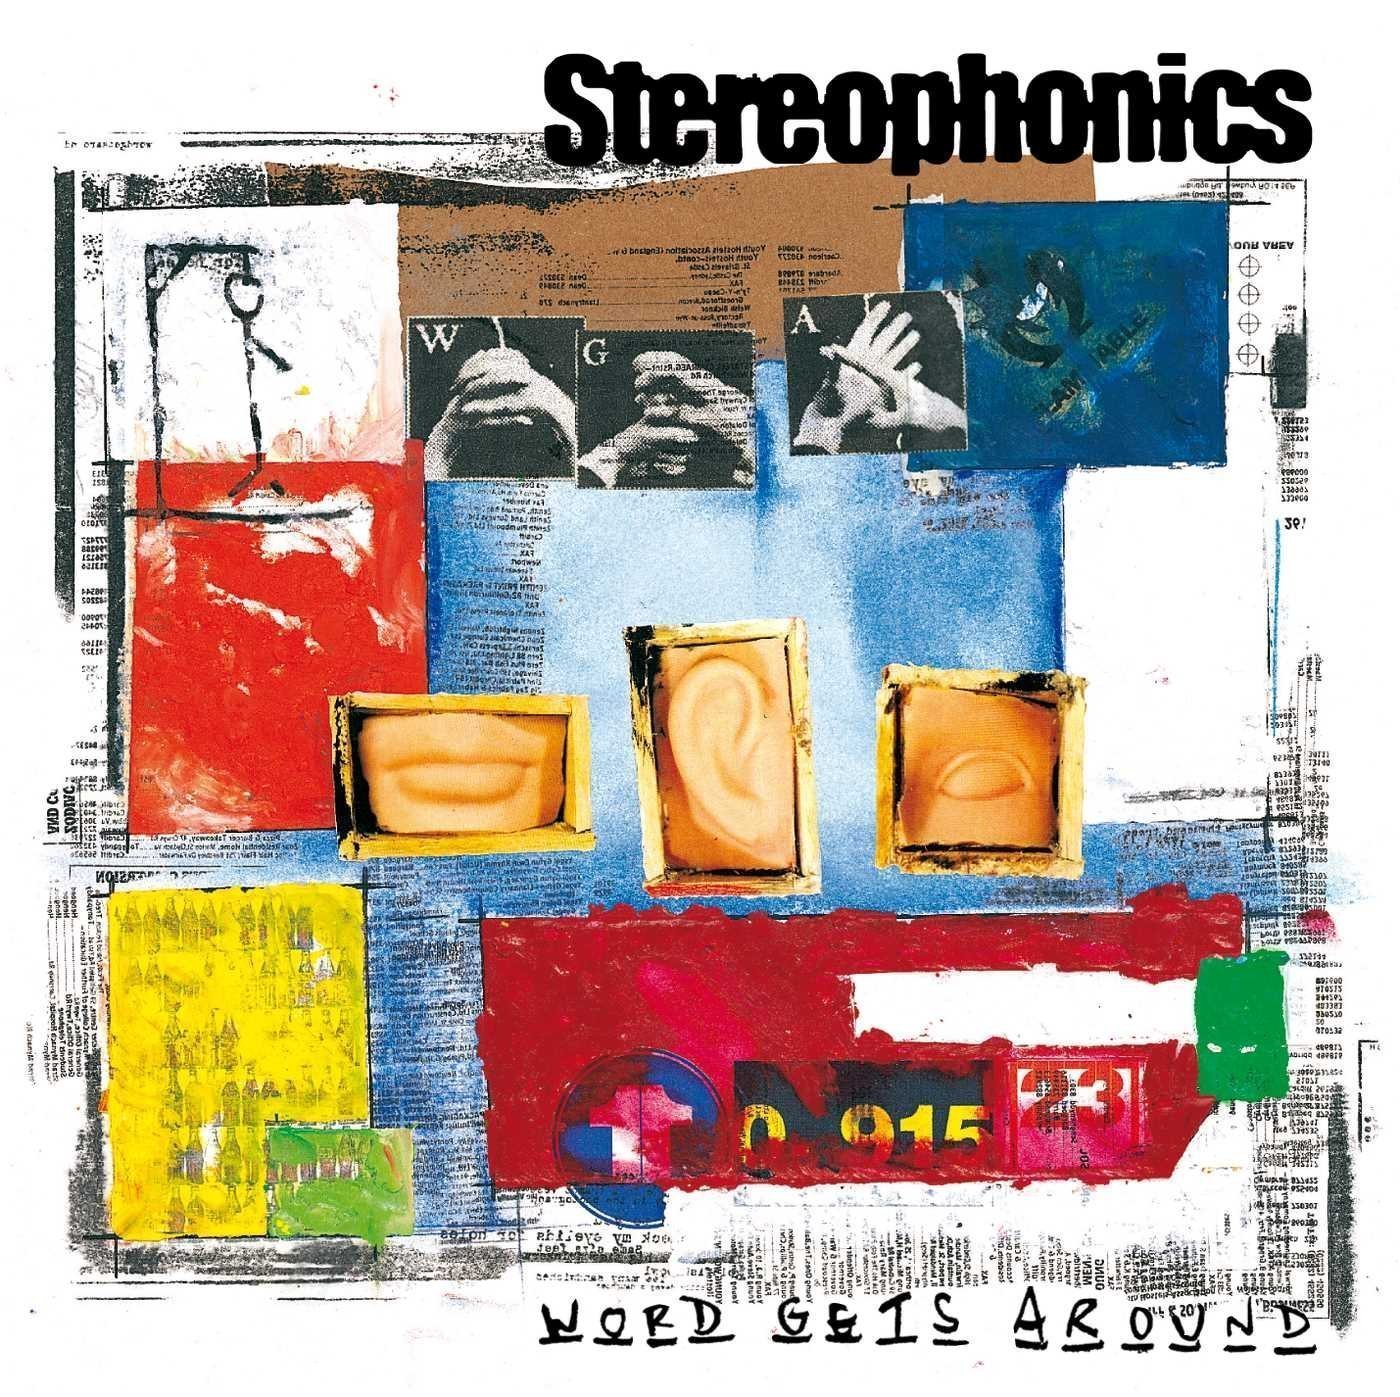 Disque vinyle Stereophonics - Word Gets Around (LP)